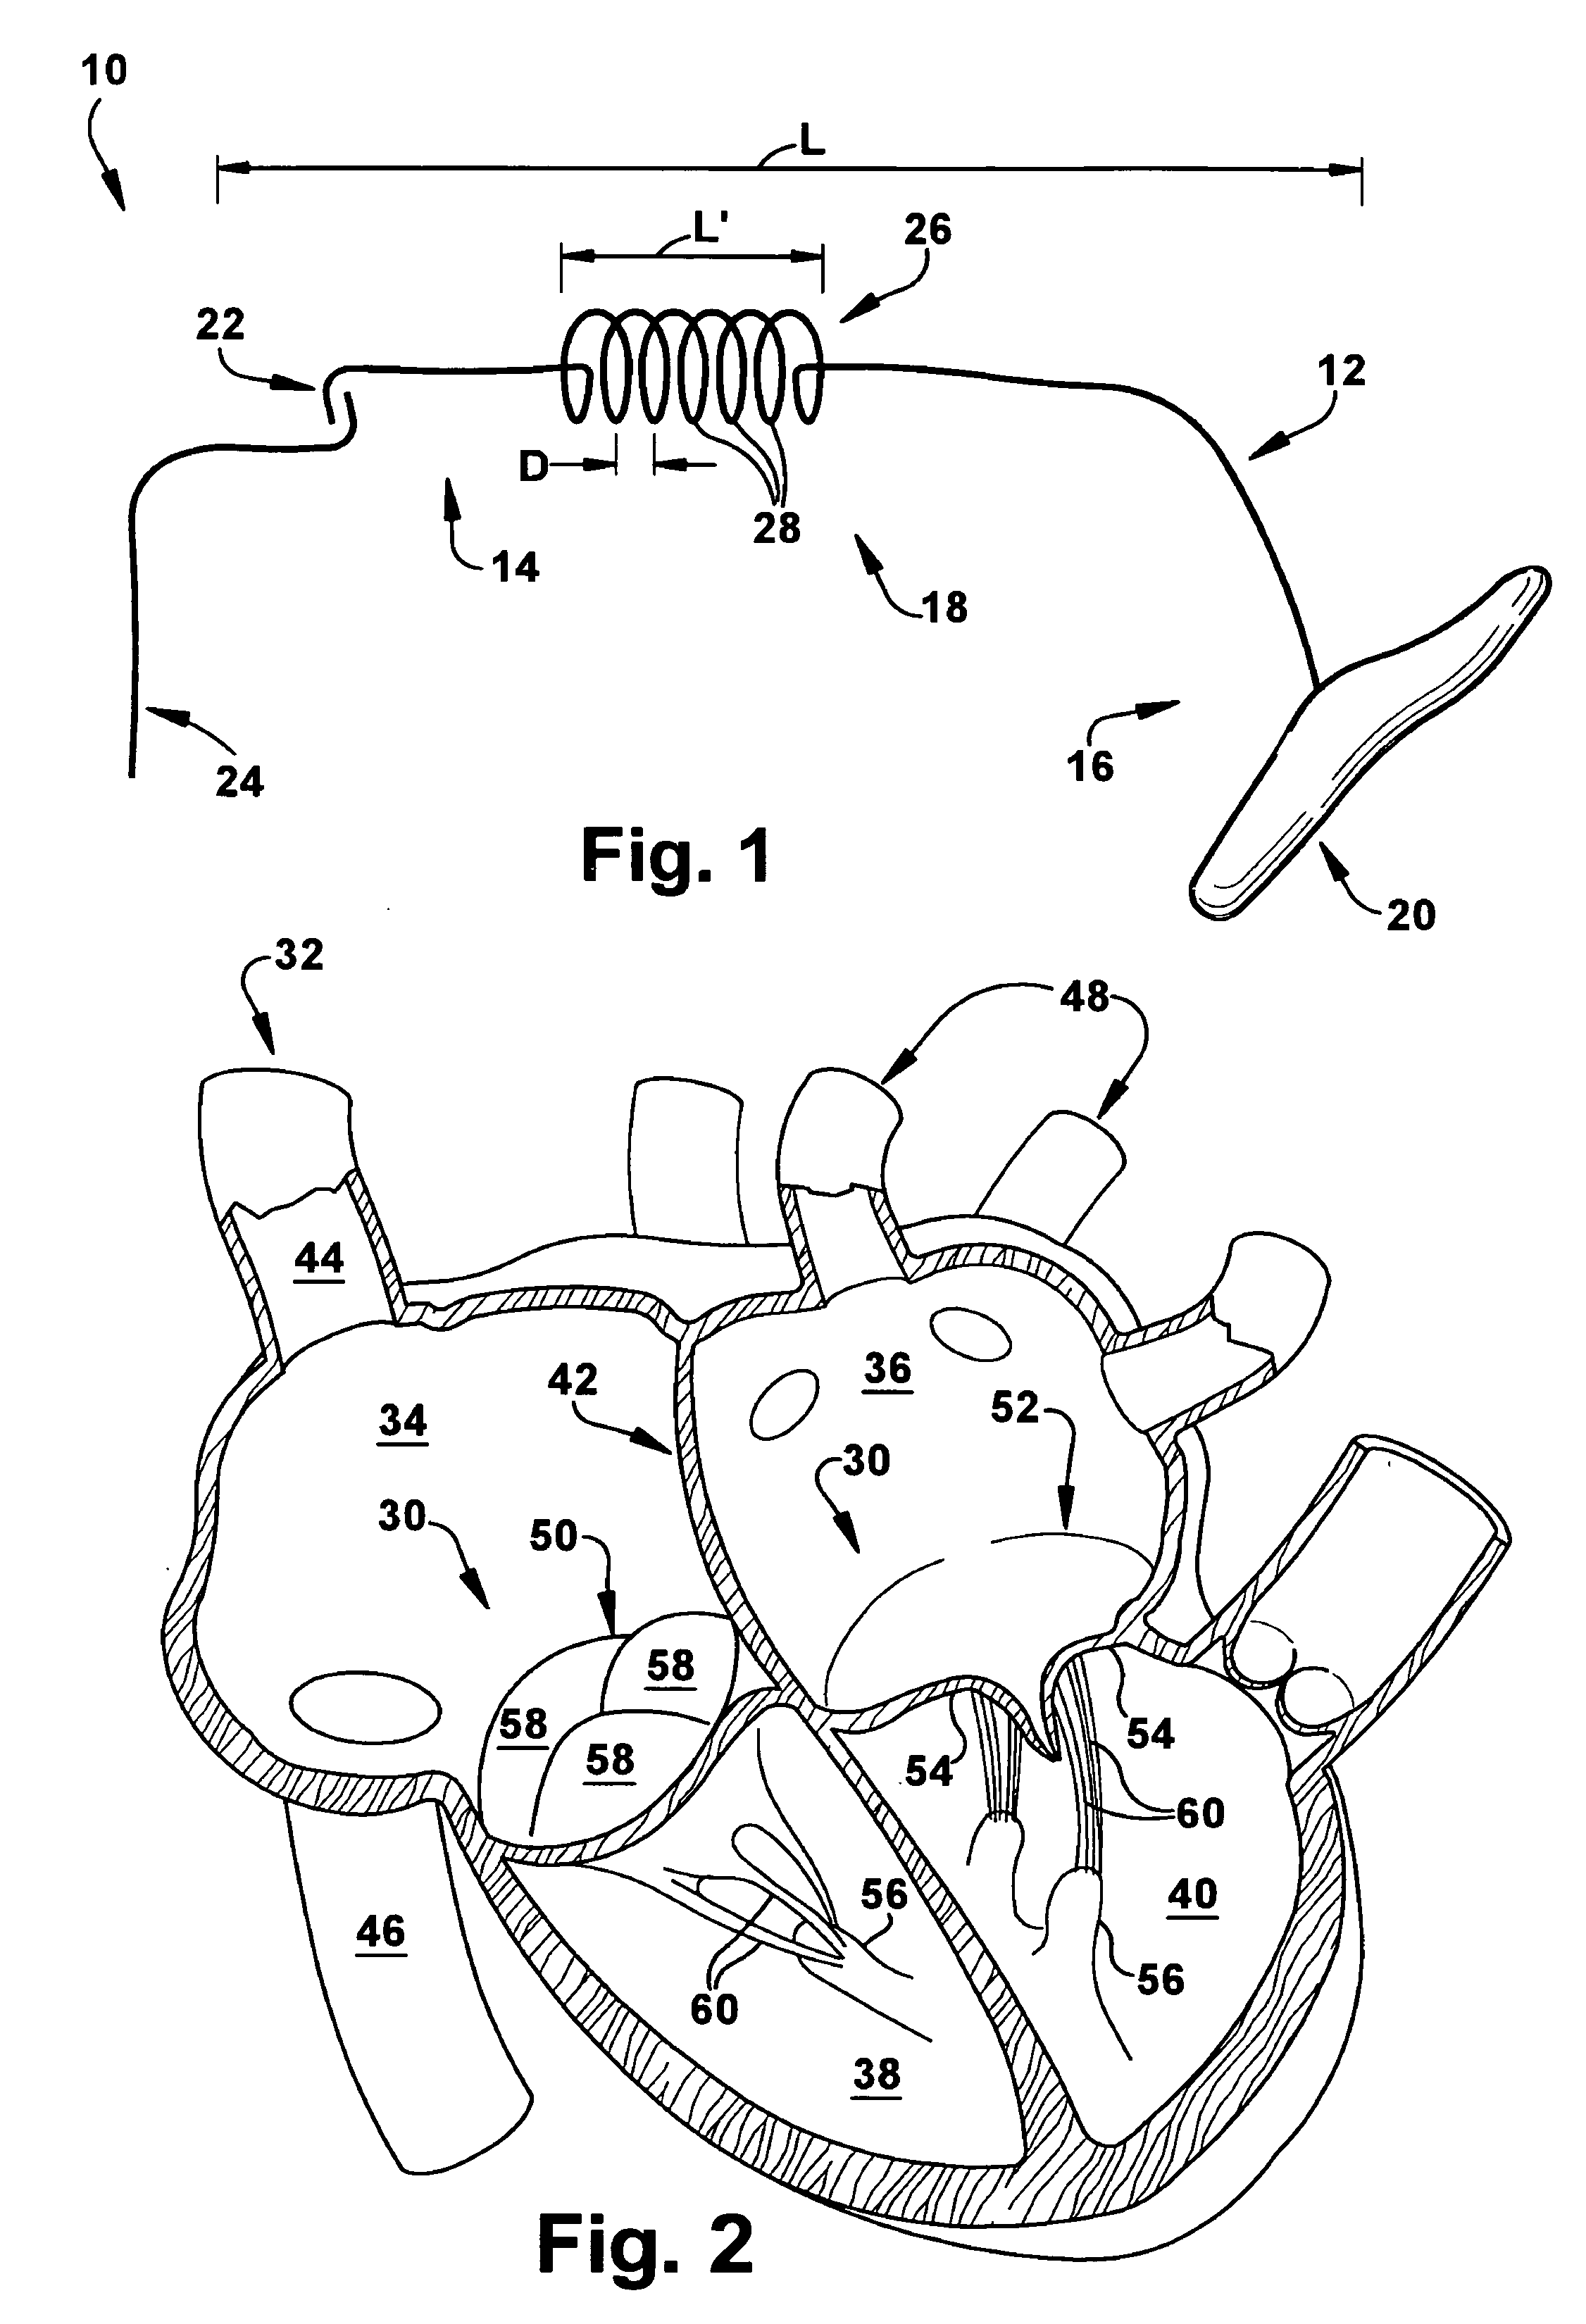 Apparatus and method for treating a regurgitant valve